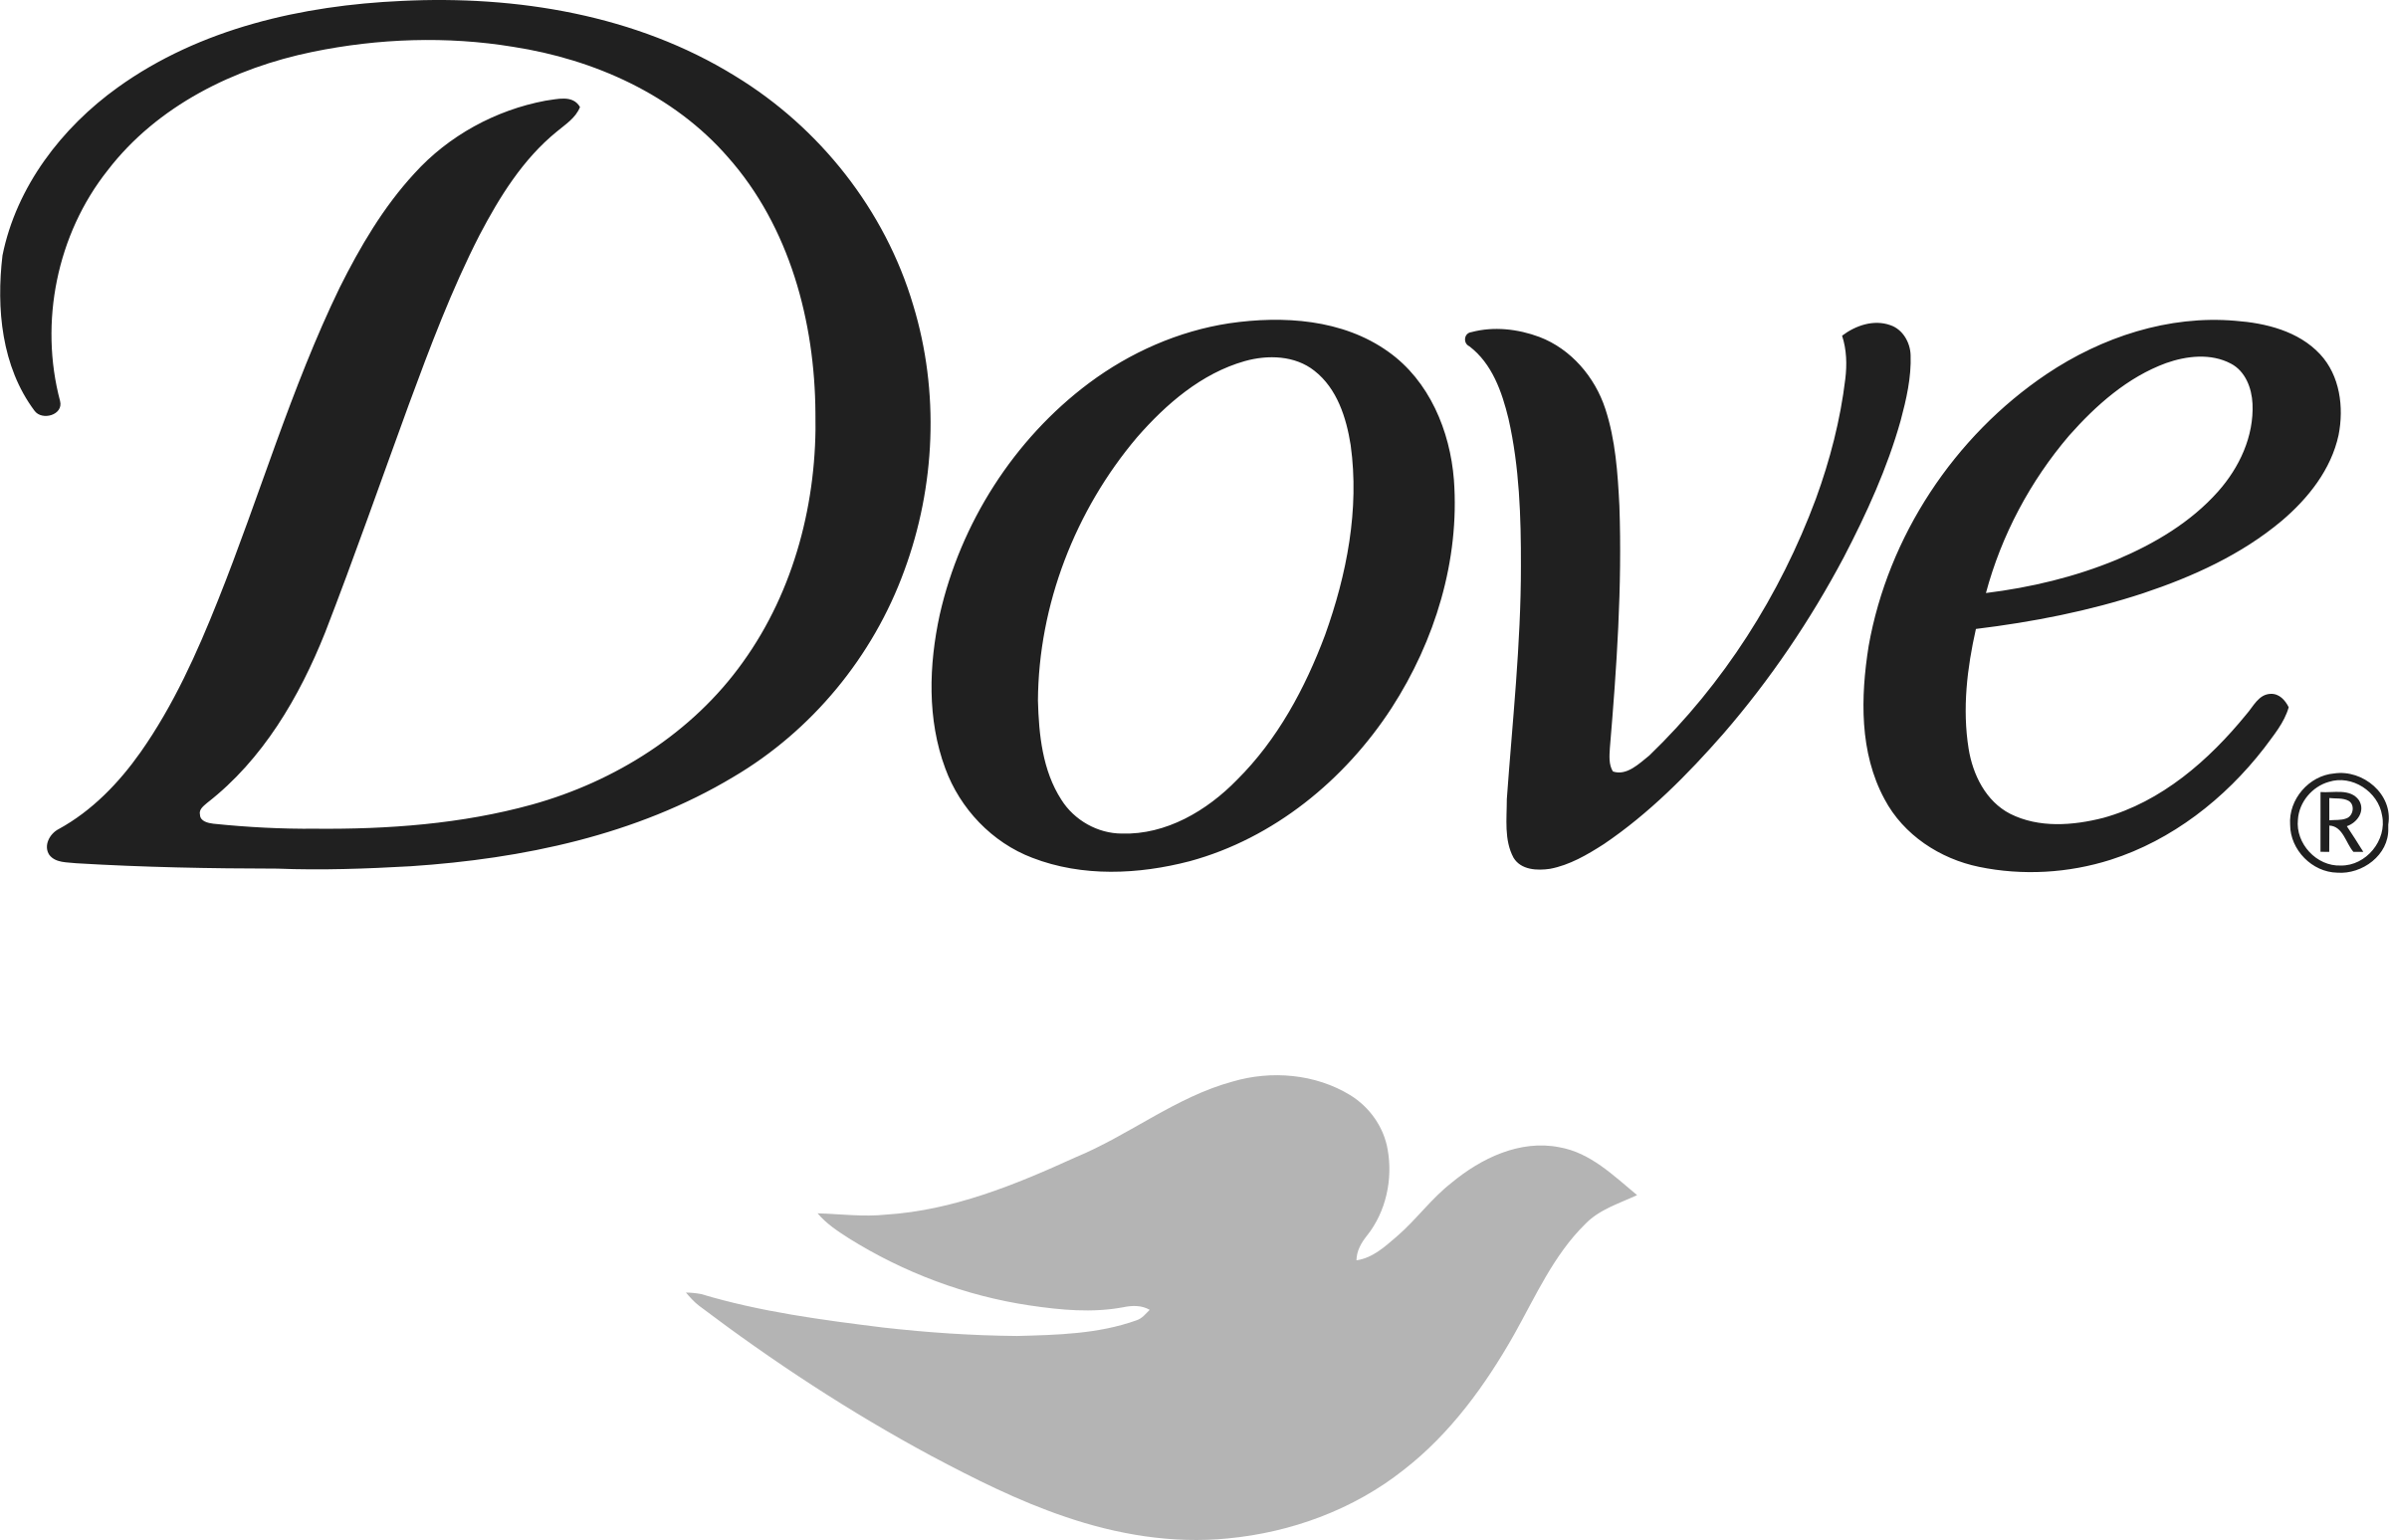 dove-5-logo-png-transparent.png